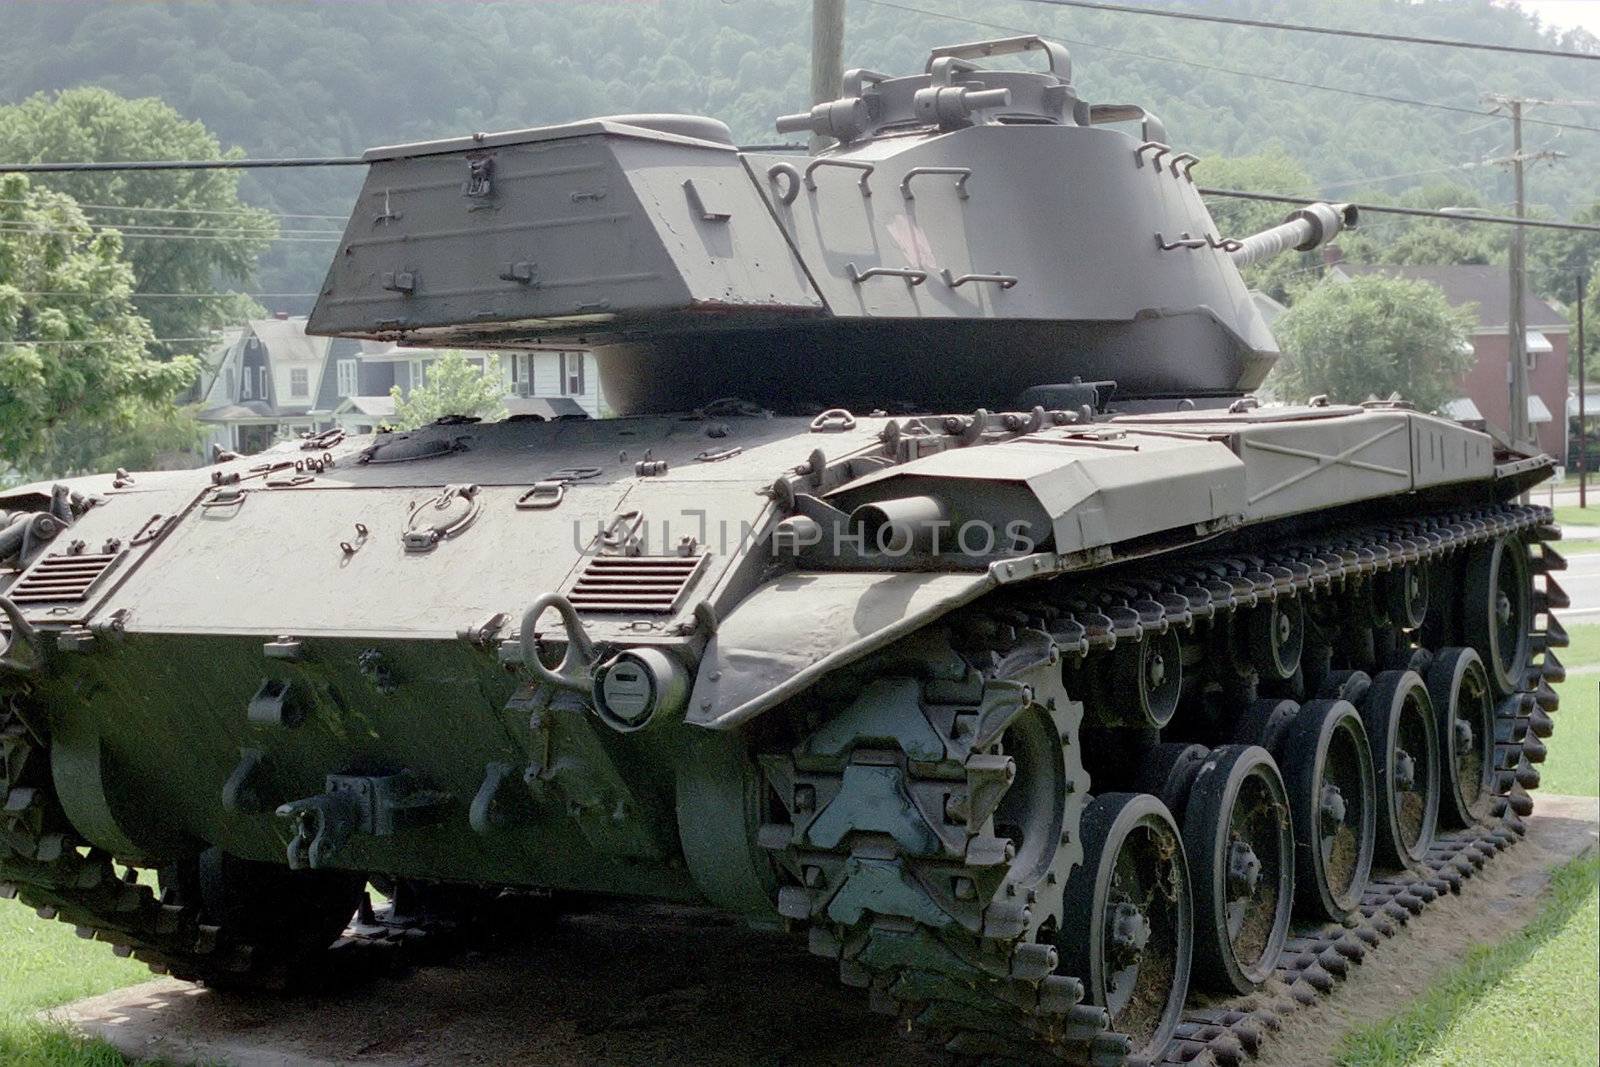 A large tank seen up close